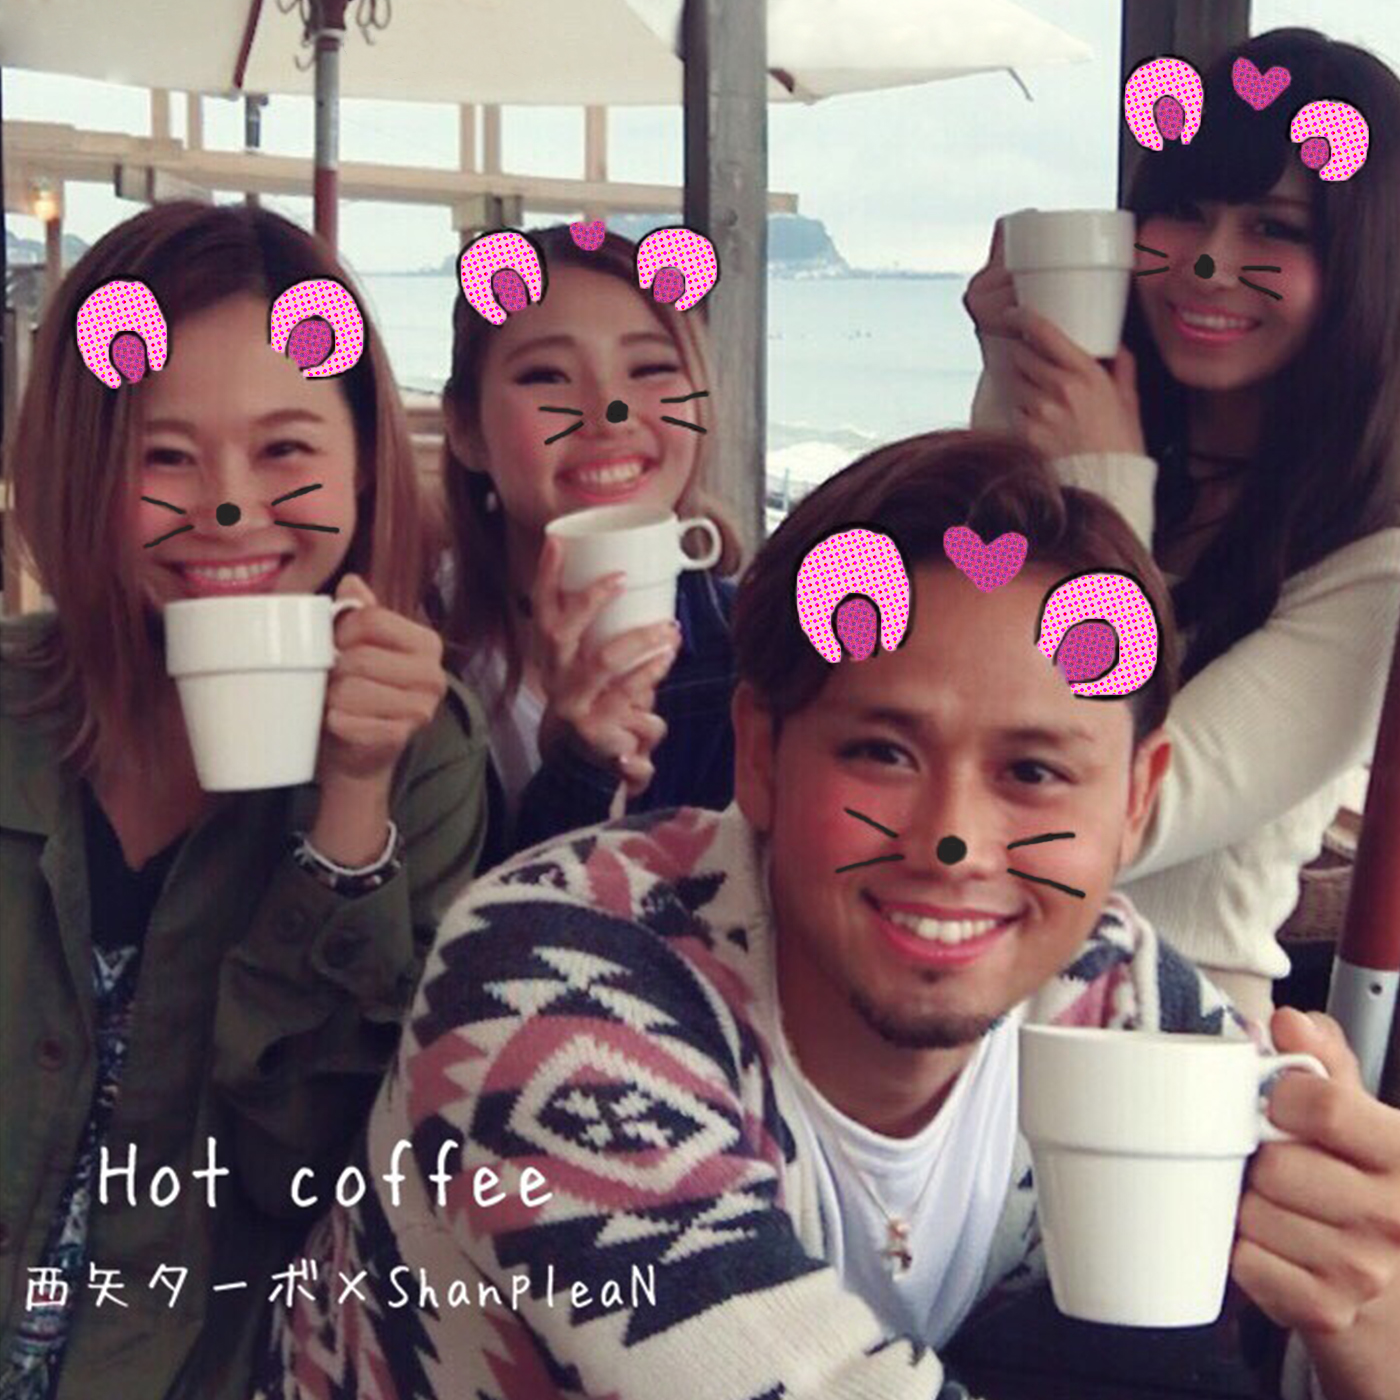 hot coffe ホットコーヒー 西矢ターボ ShanpleaN turbo ジャケット画像